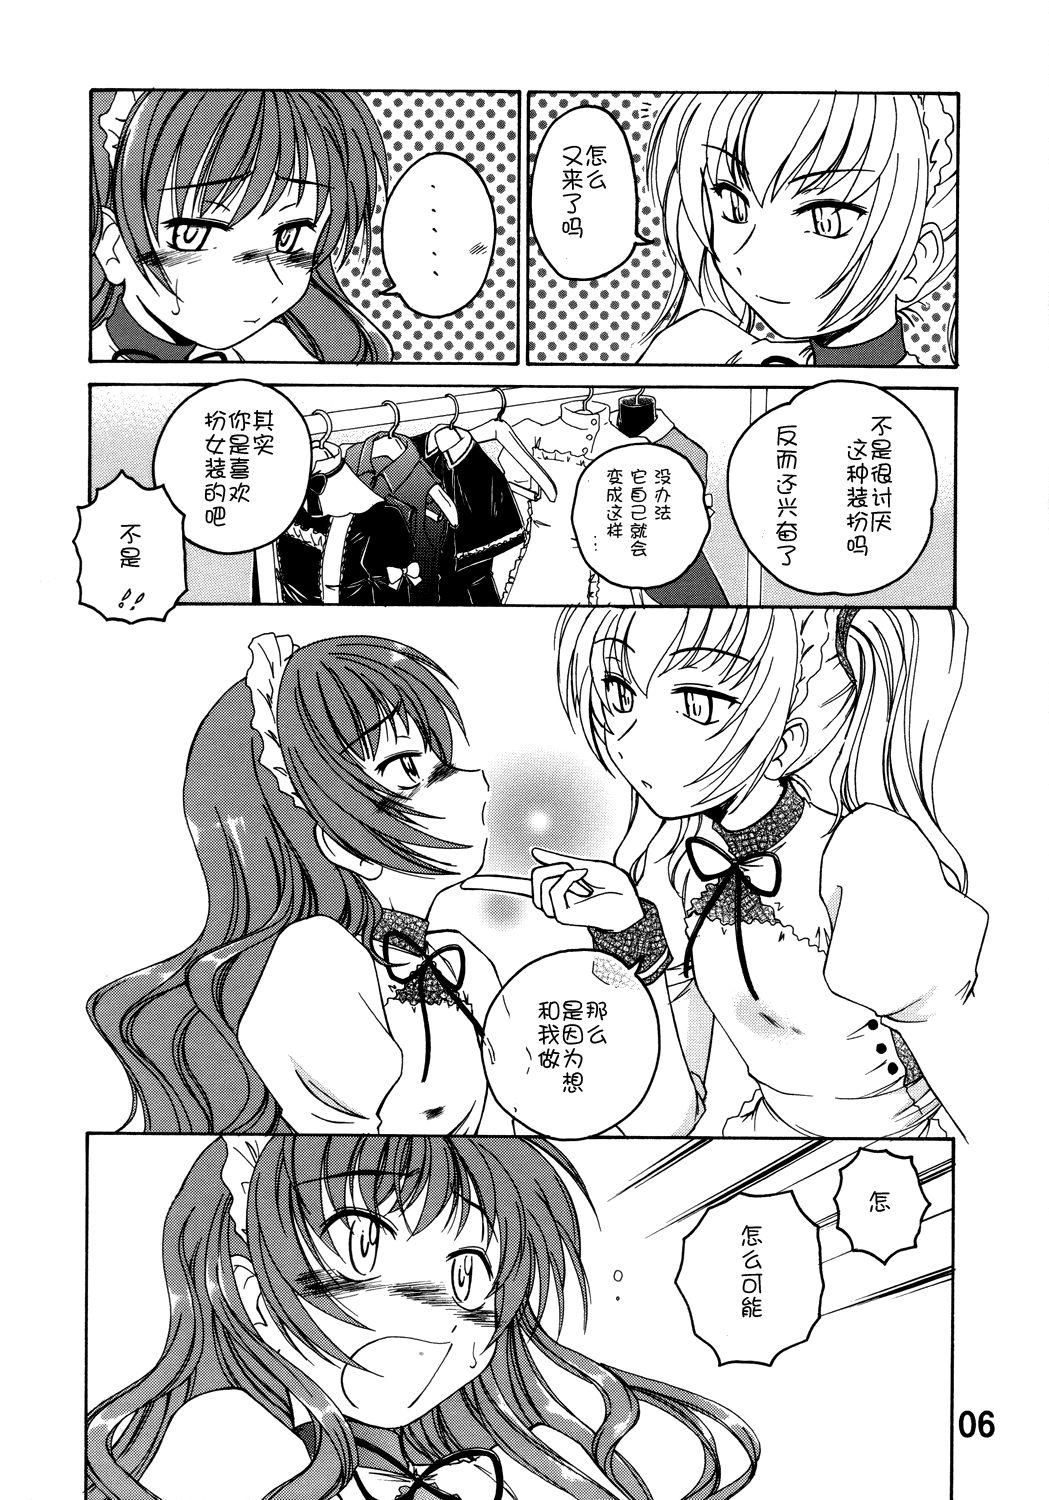 Office Sex Manga Sangyou Haikibutsu 11 - Comic Industrial Wastes 11 - Princess princess Ass Fuck - Page 5